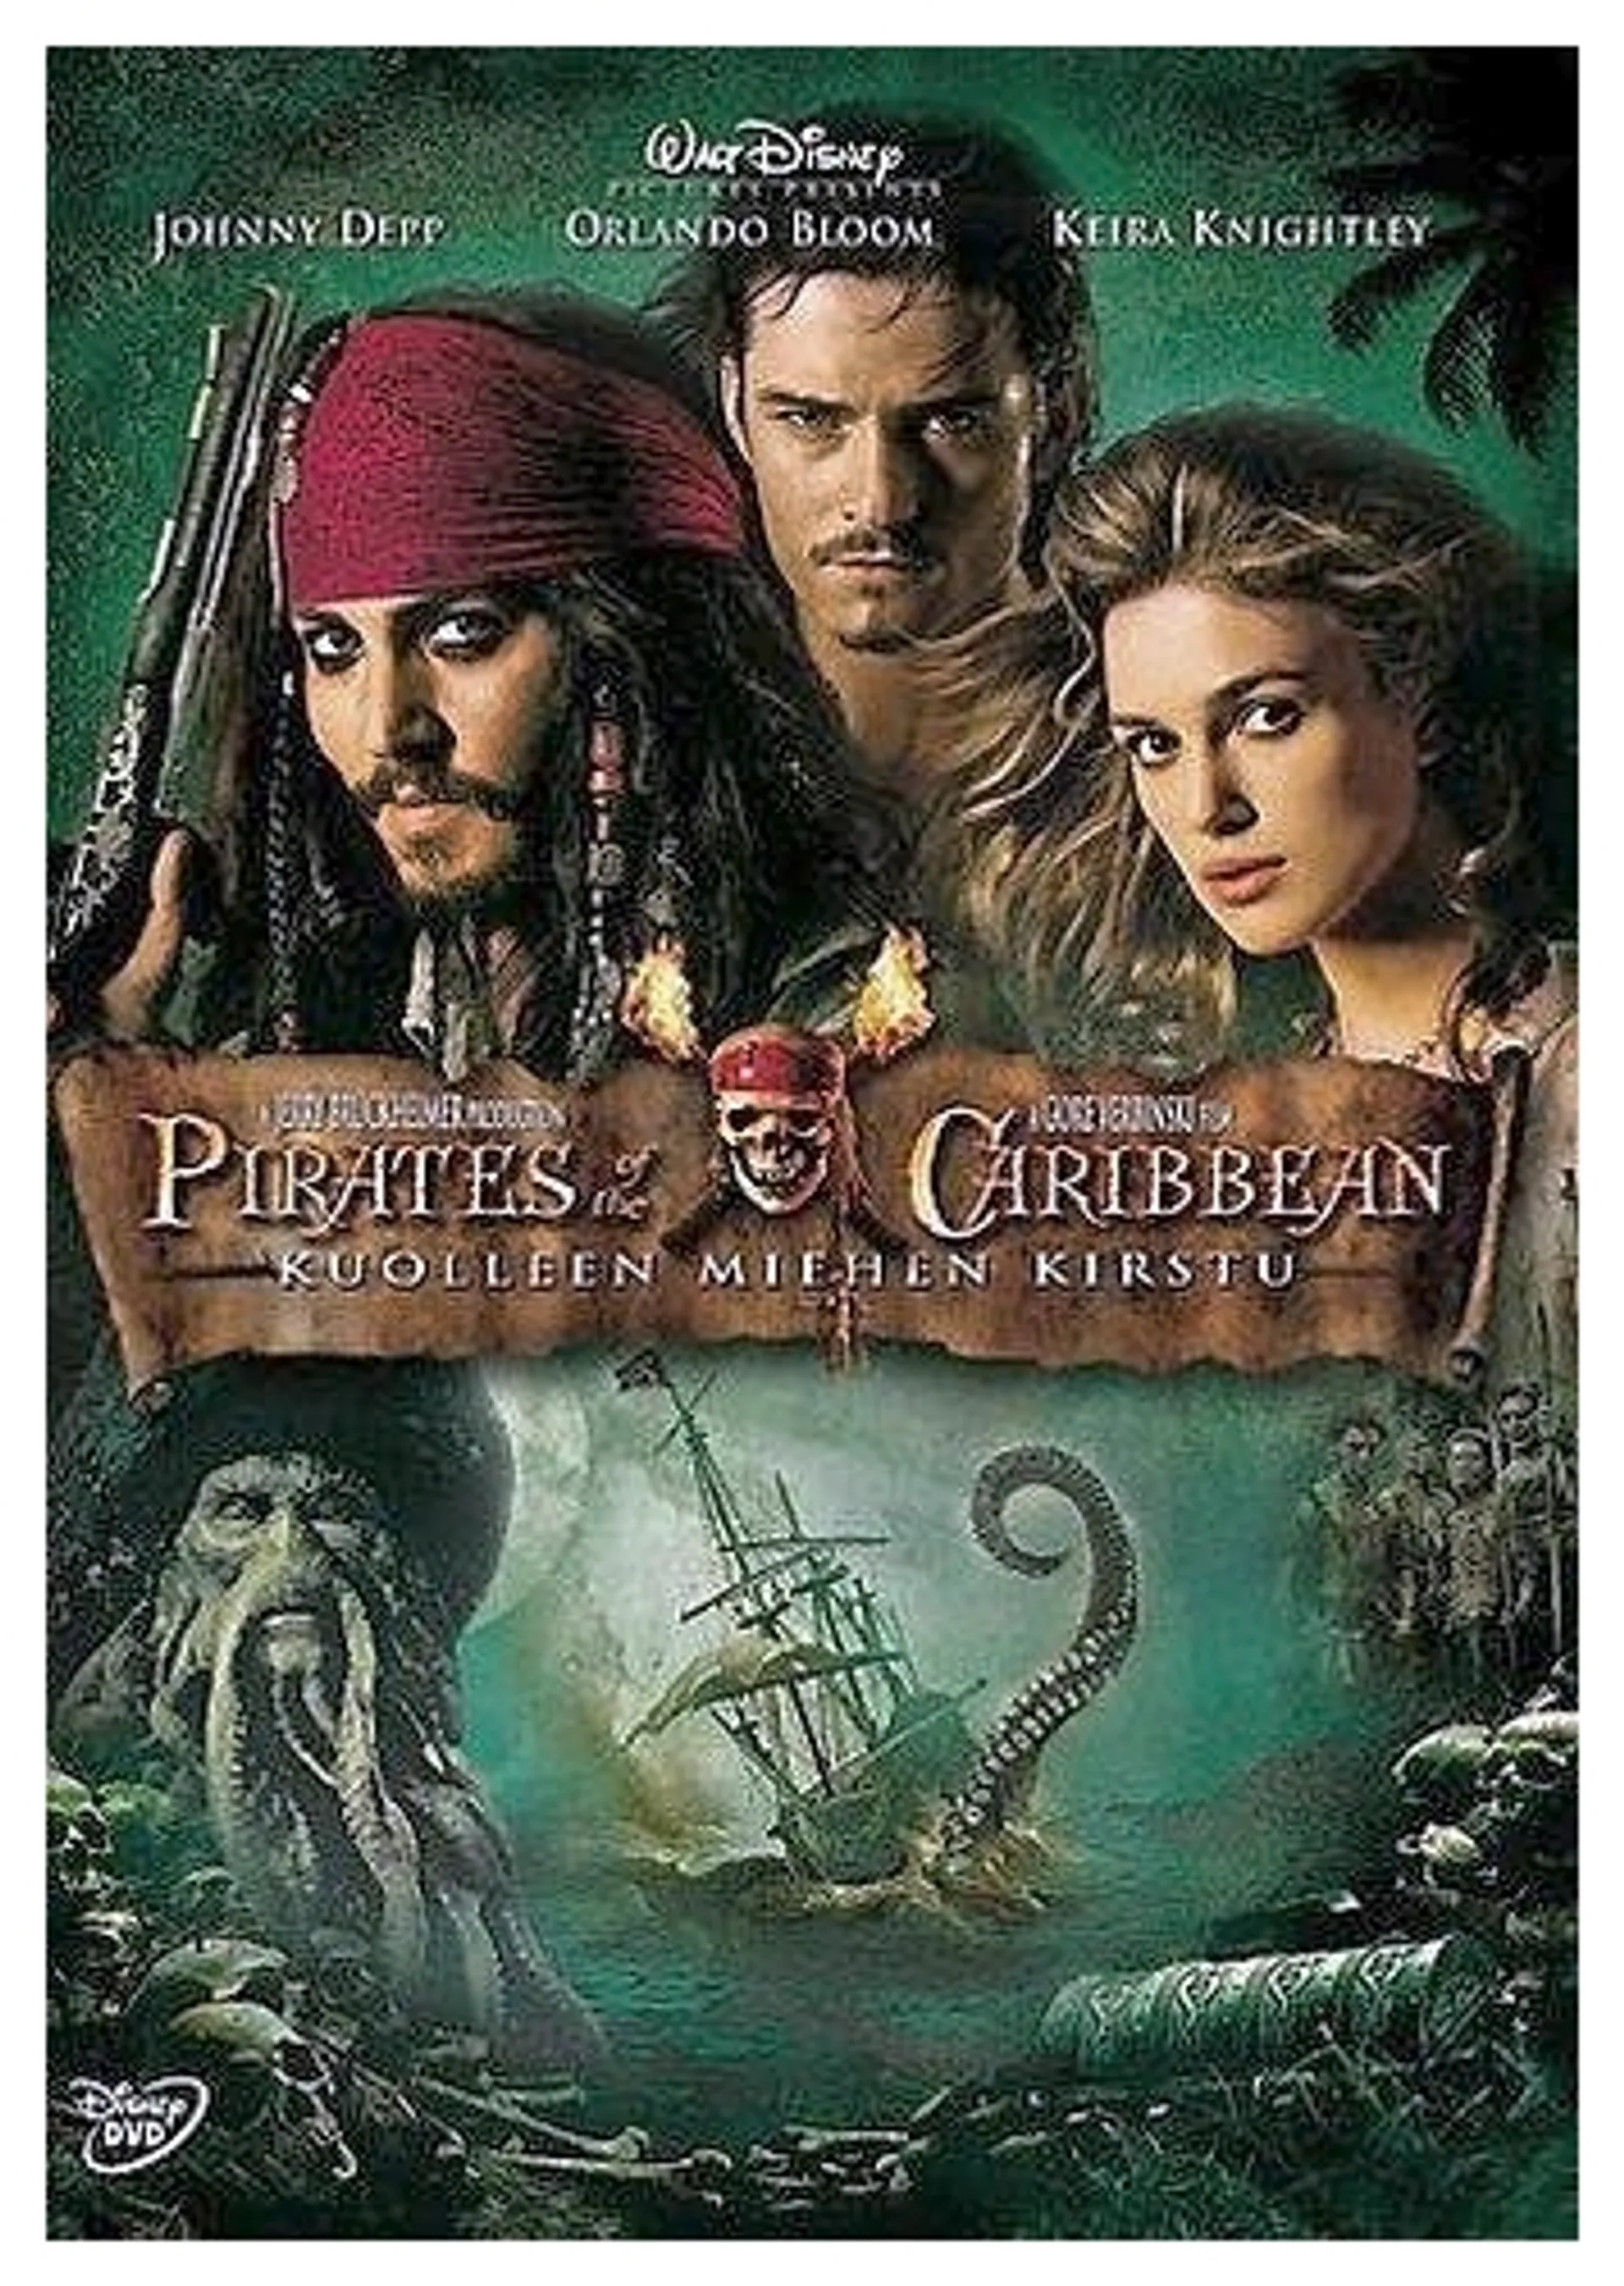 Pirates Of The Caribbean - Kuolleen miehen kirstu DVD